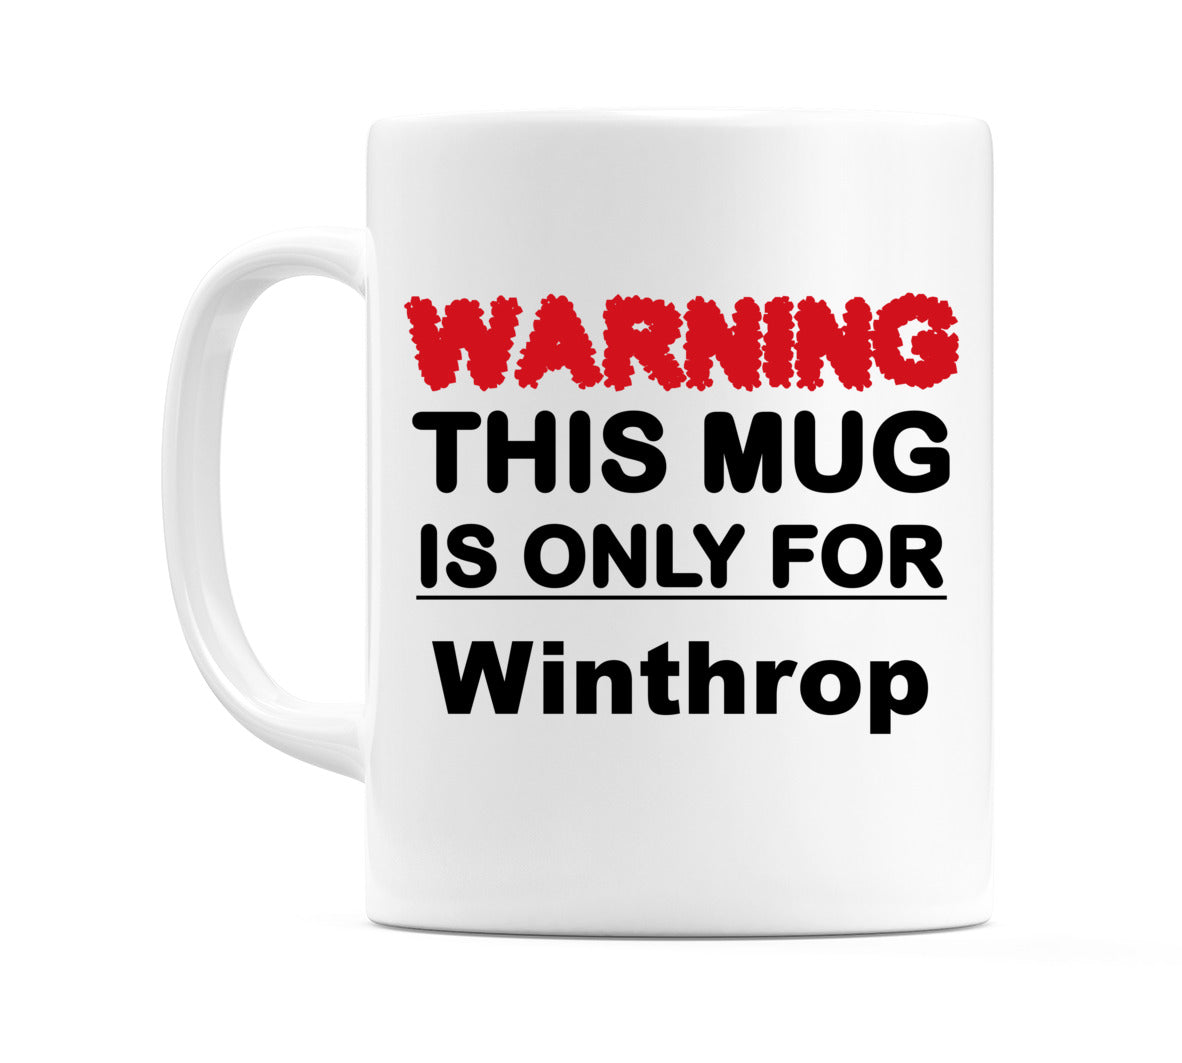 Warning This Mug is ONLY for Winthrop Mug